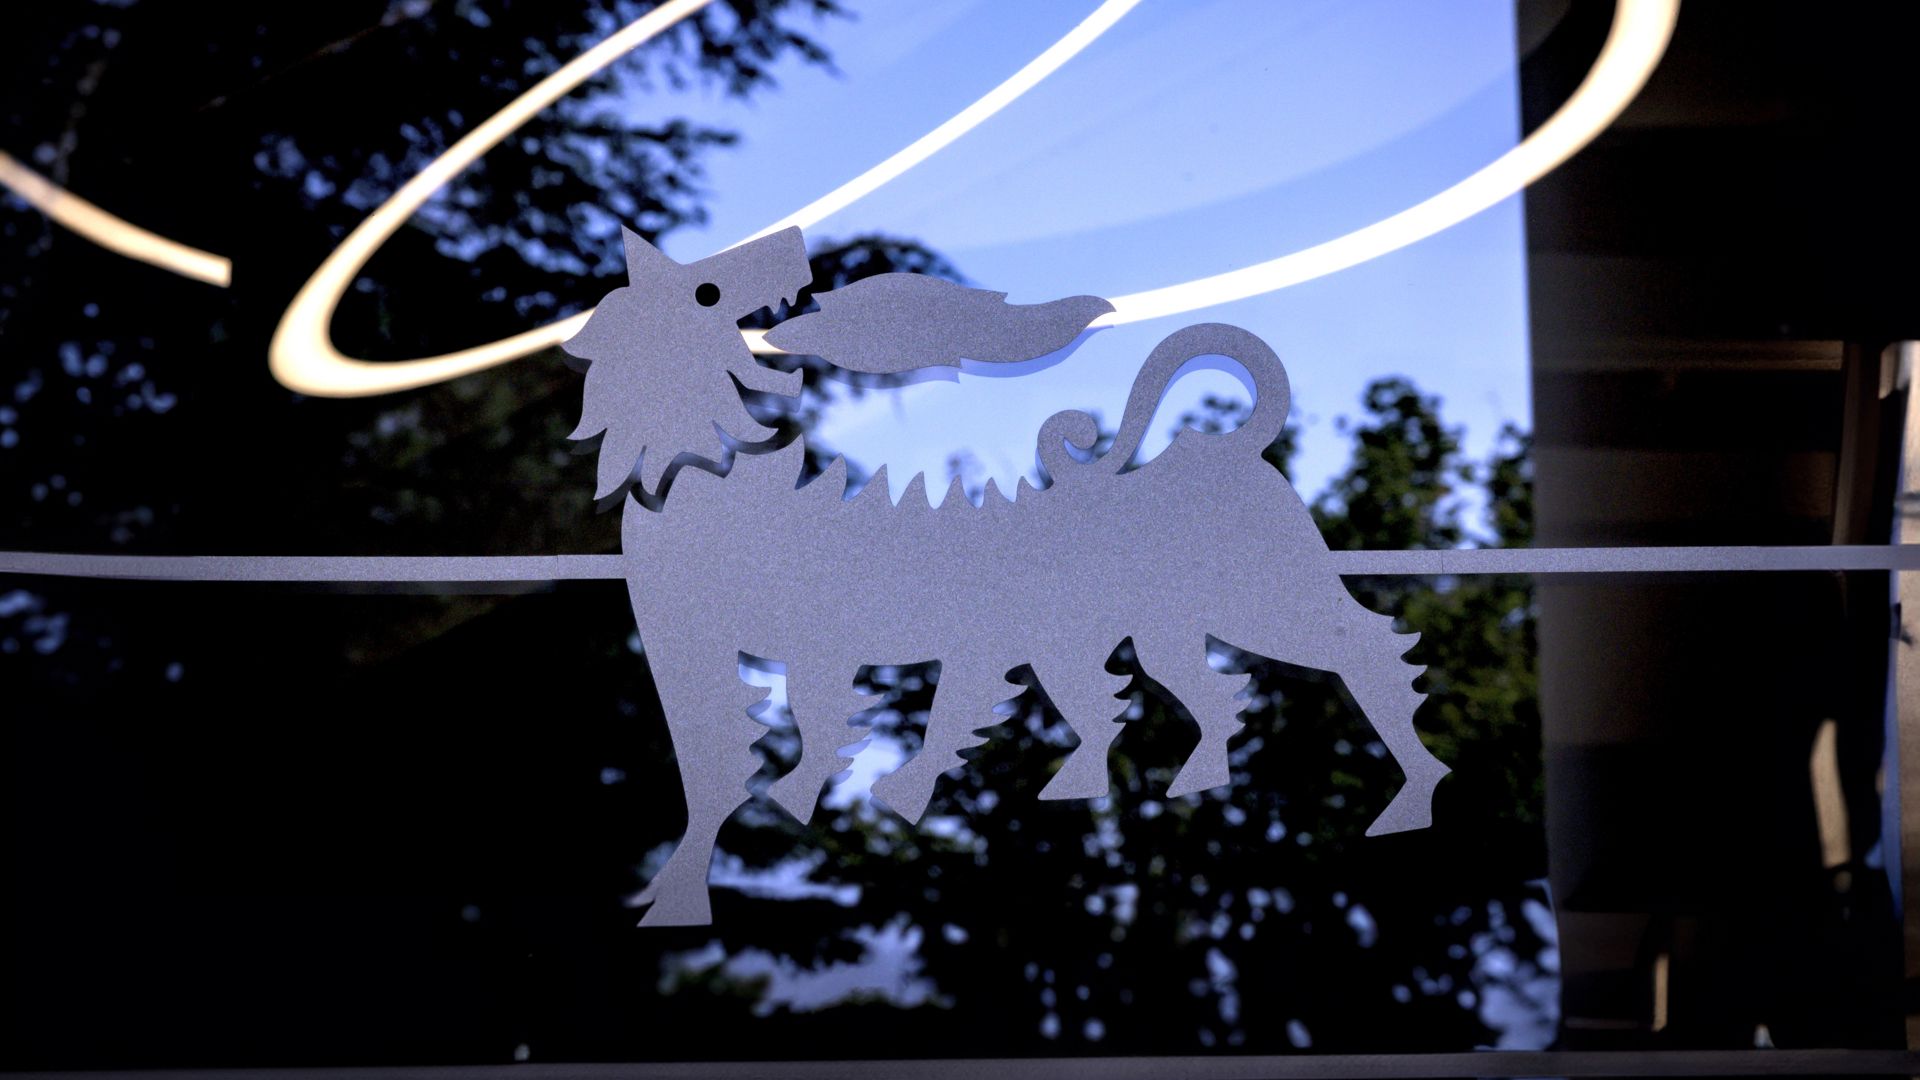 Eni dog logo on the glass